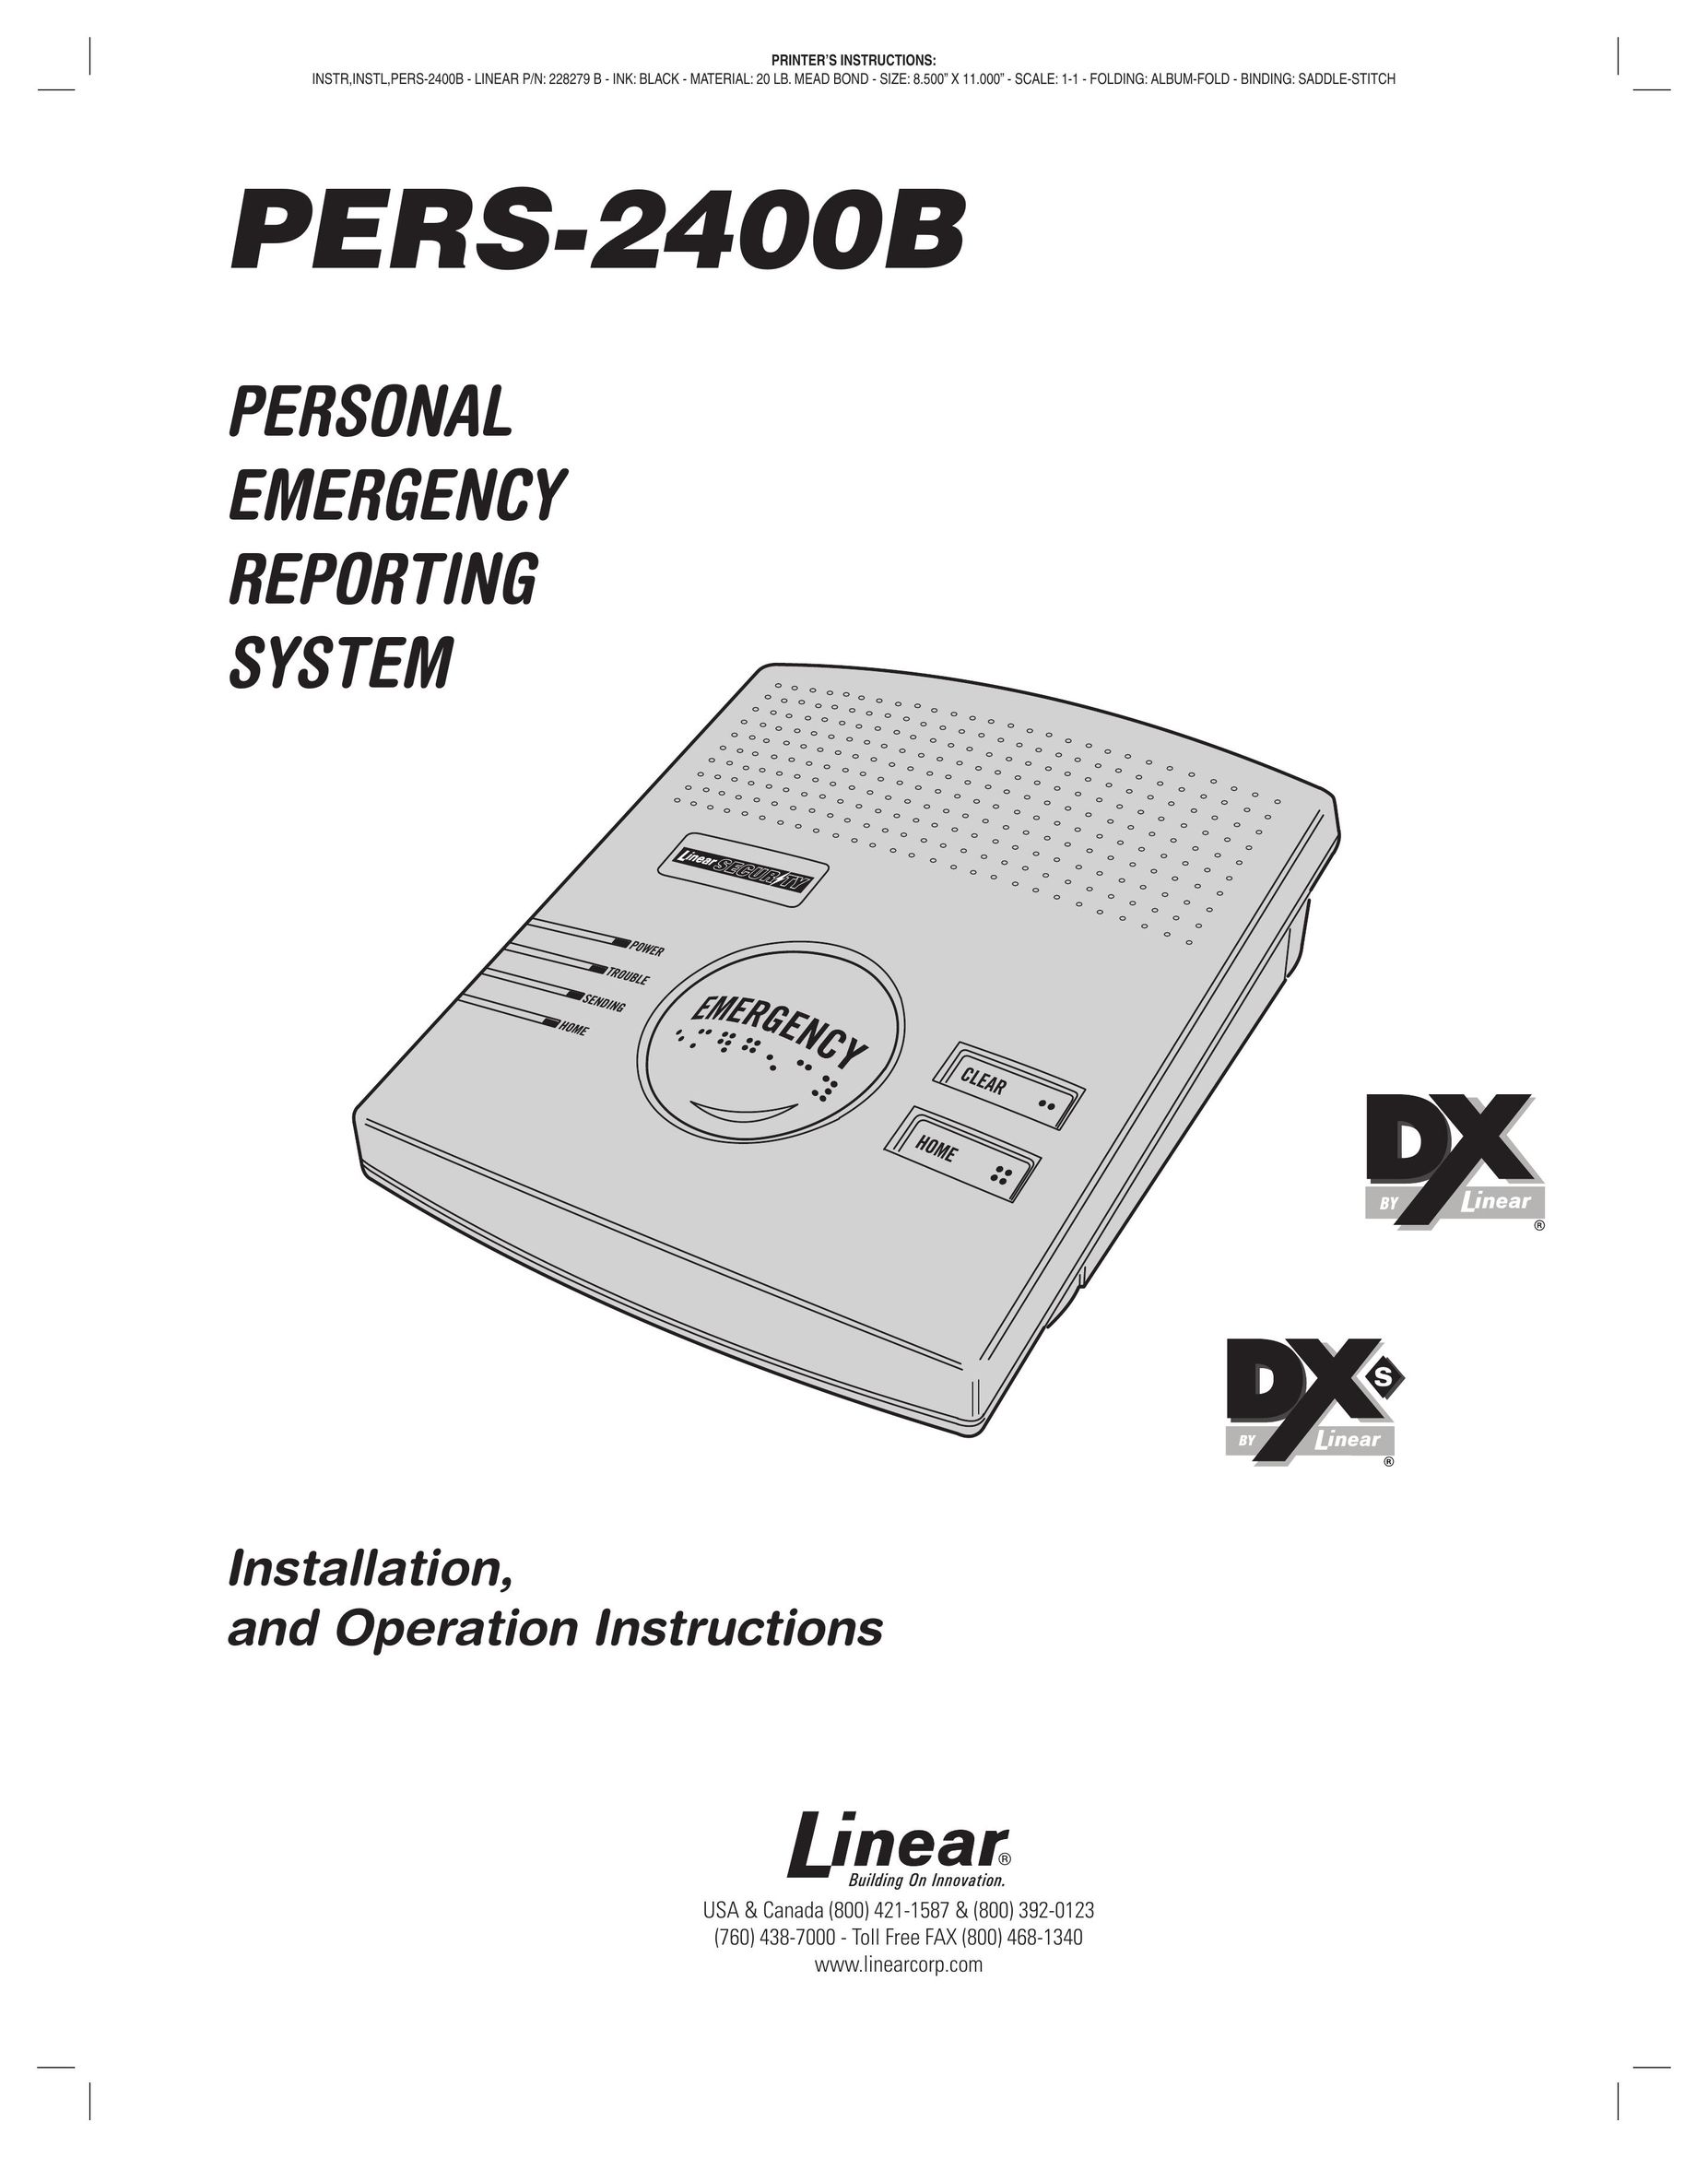 Niles Audio PERS-2400B Answering Machine User Manual